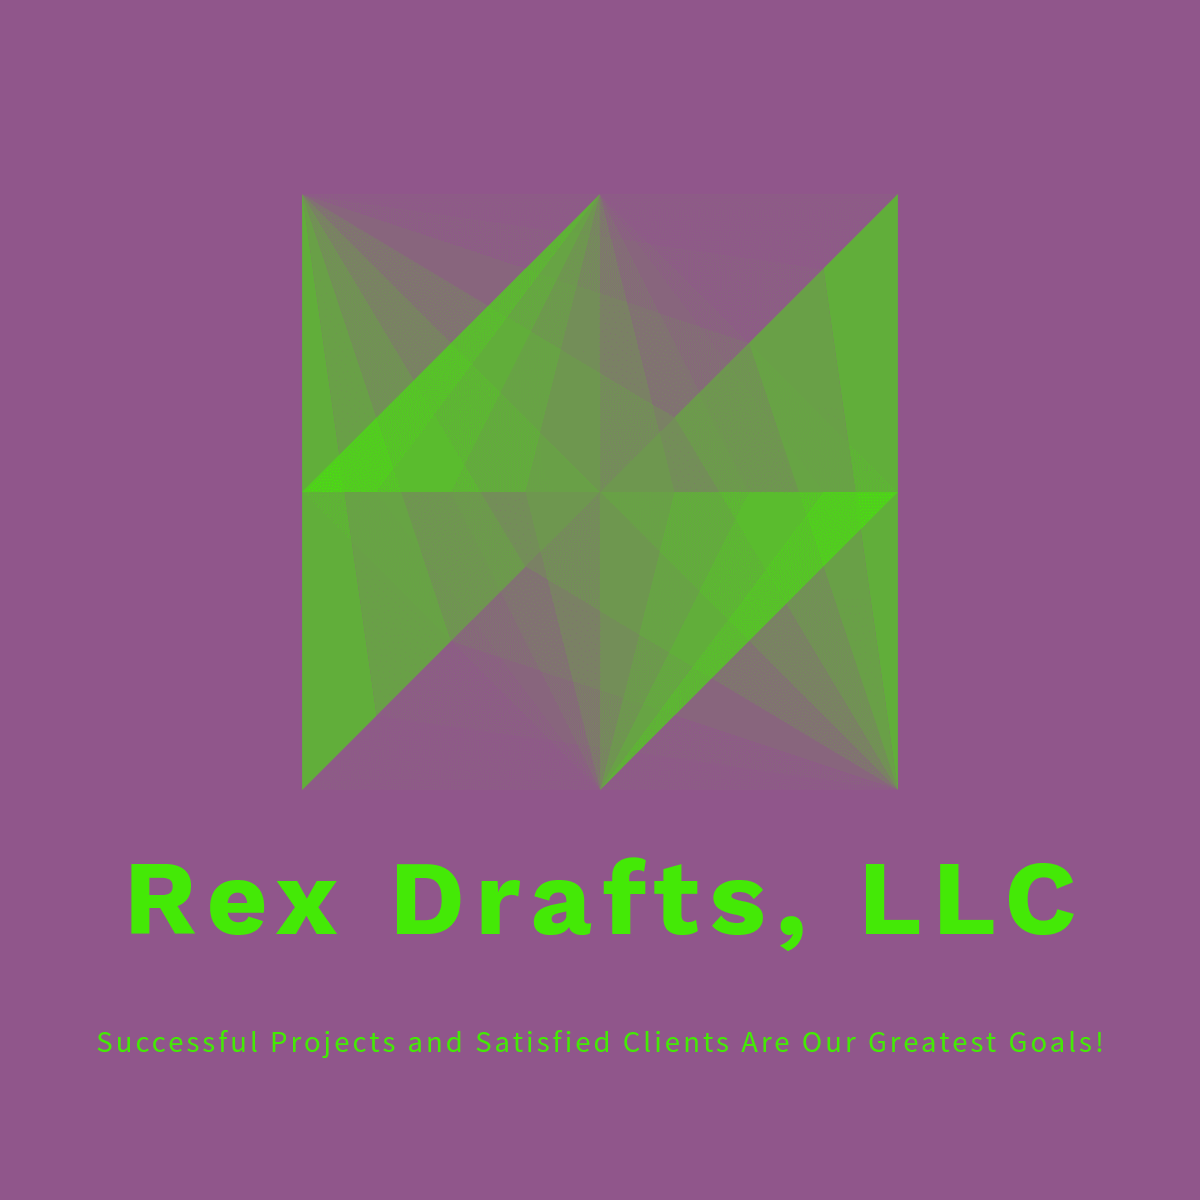 Rex Drafts, LLC